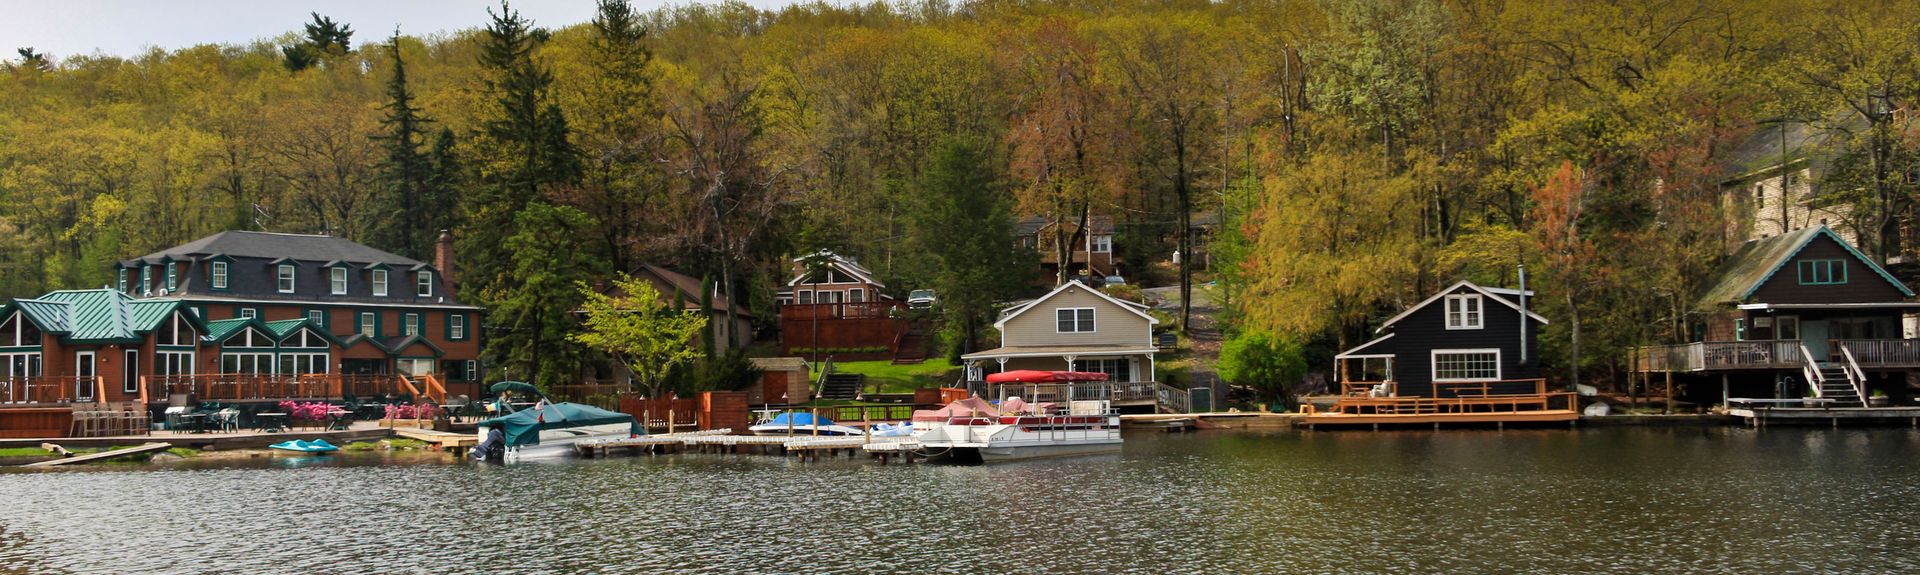 Lake Harmony Pa Vacation Rentals House Rentals More Vrbo